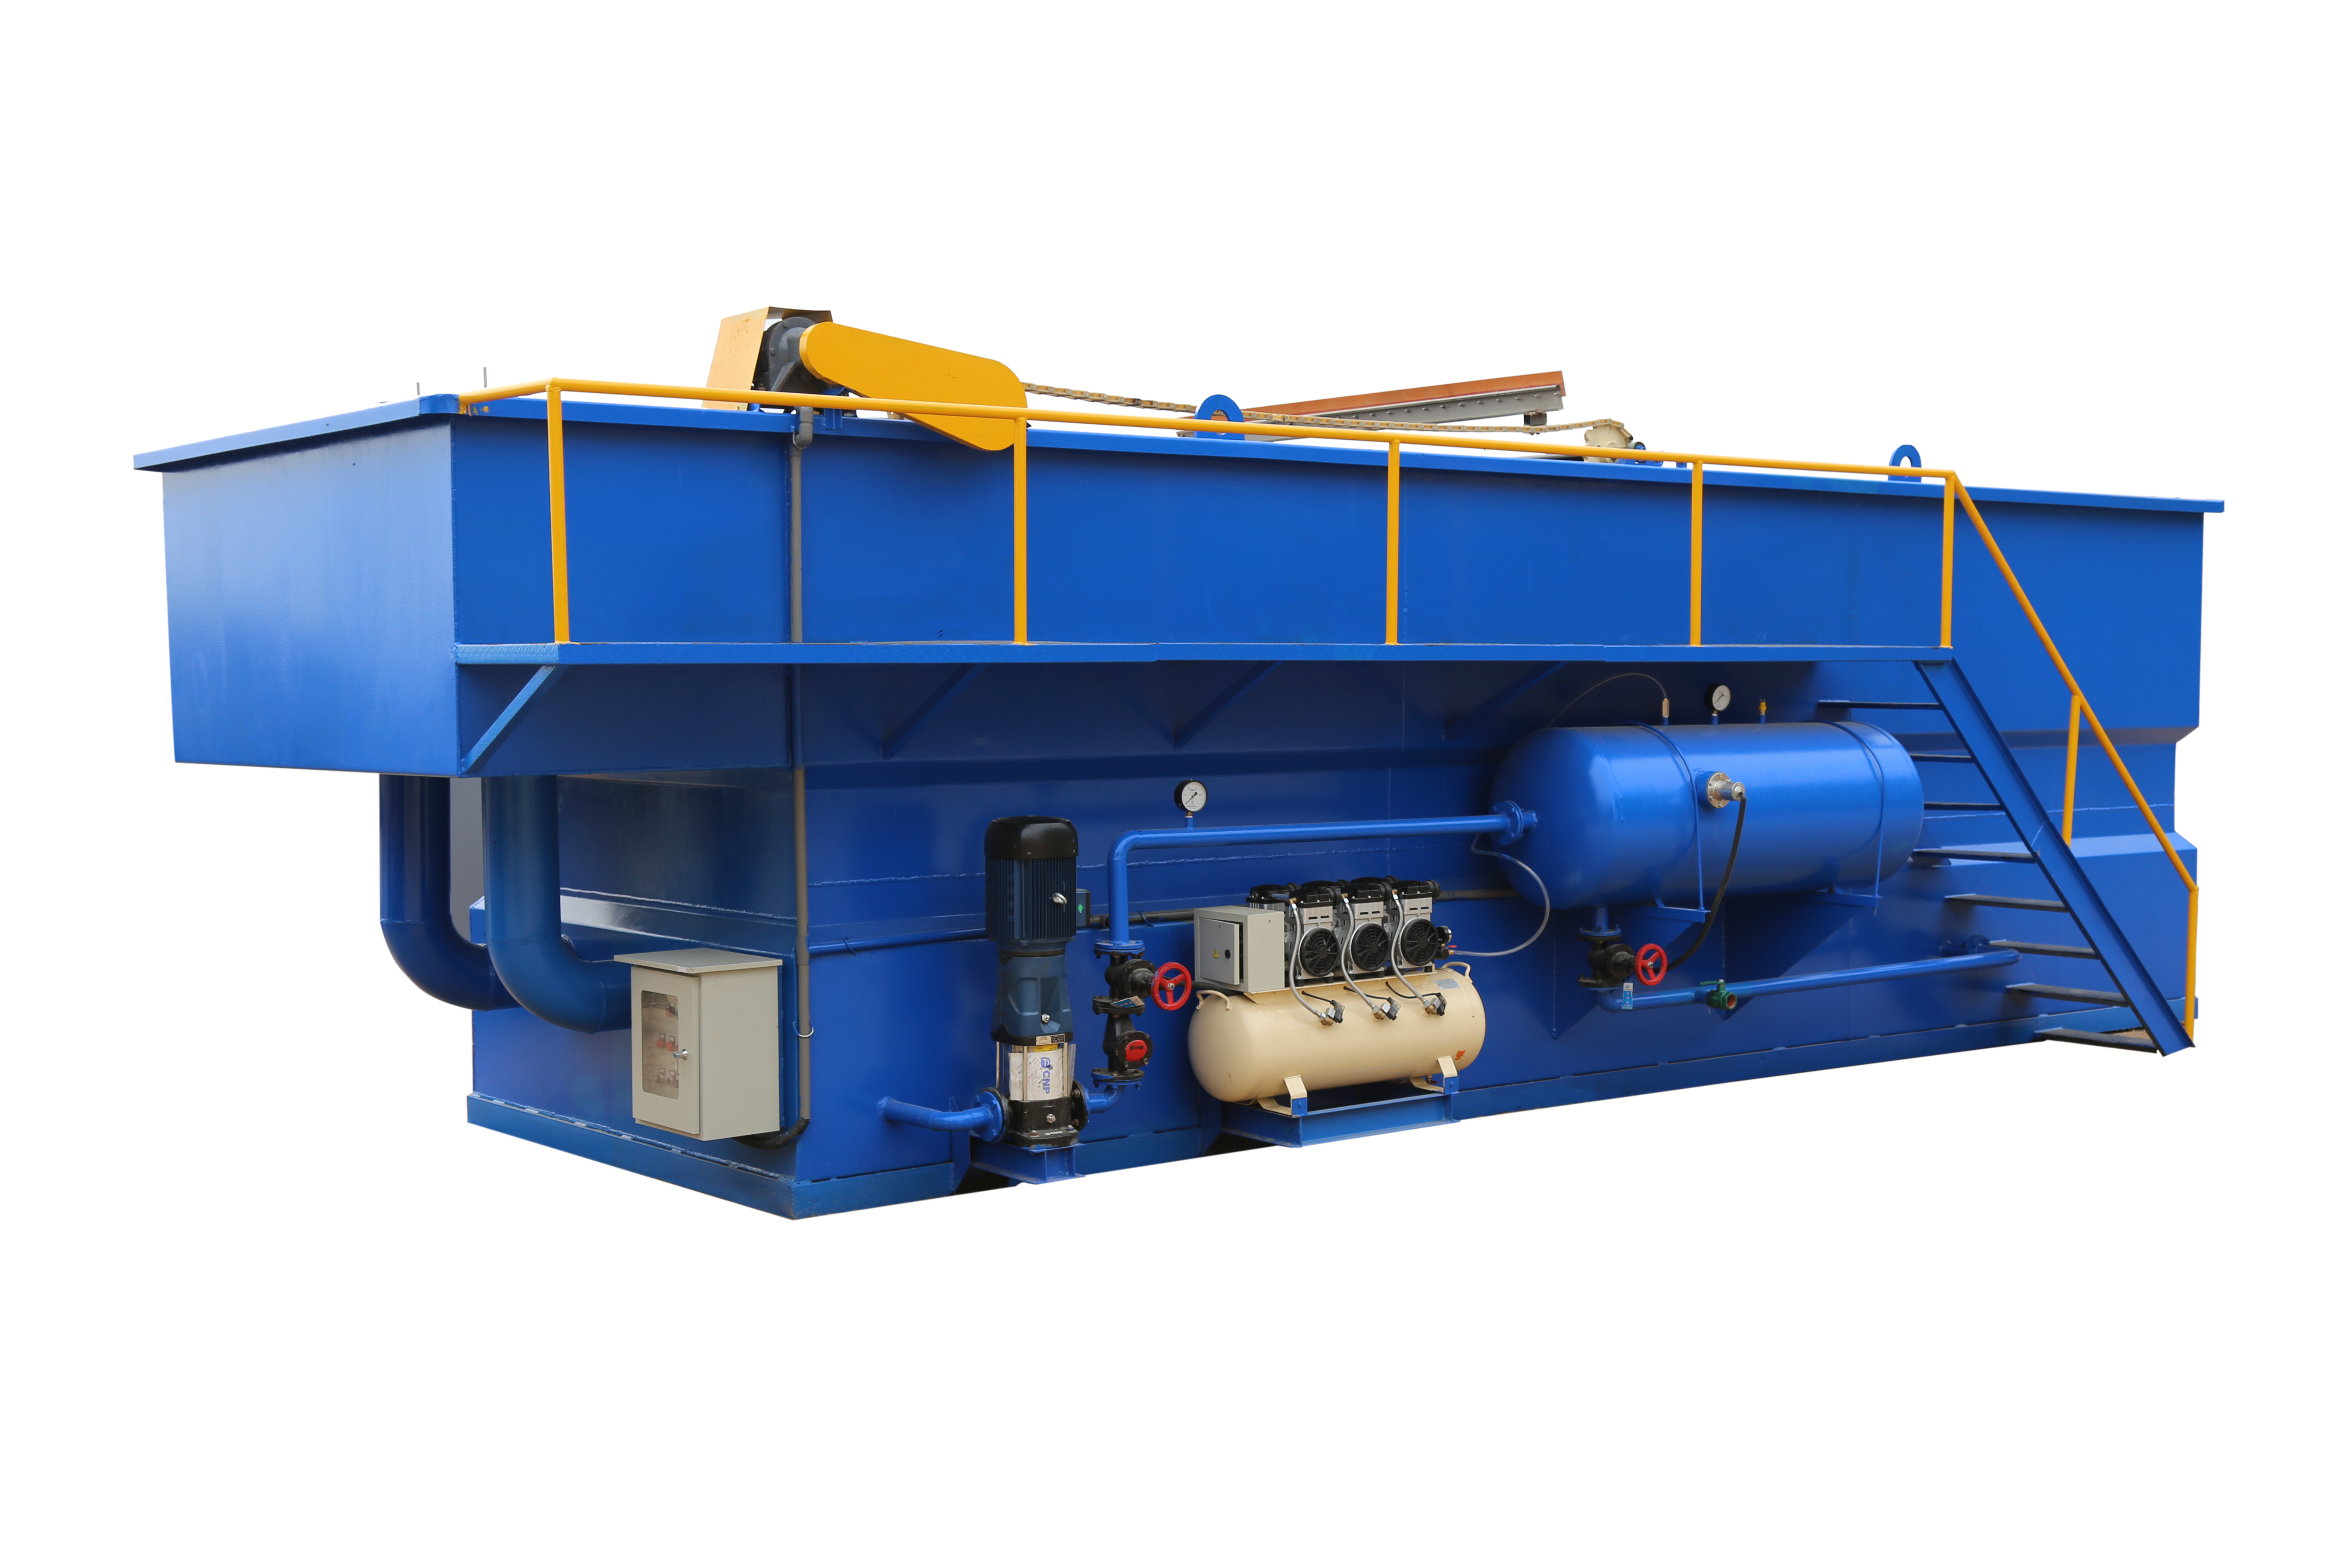 JHM DAF Air flotation machine for Restaurant wastewater